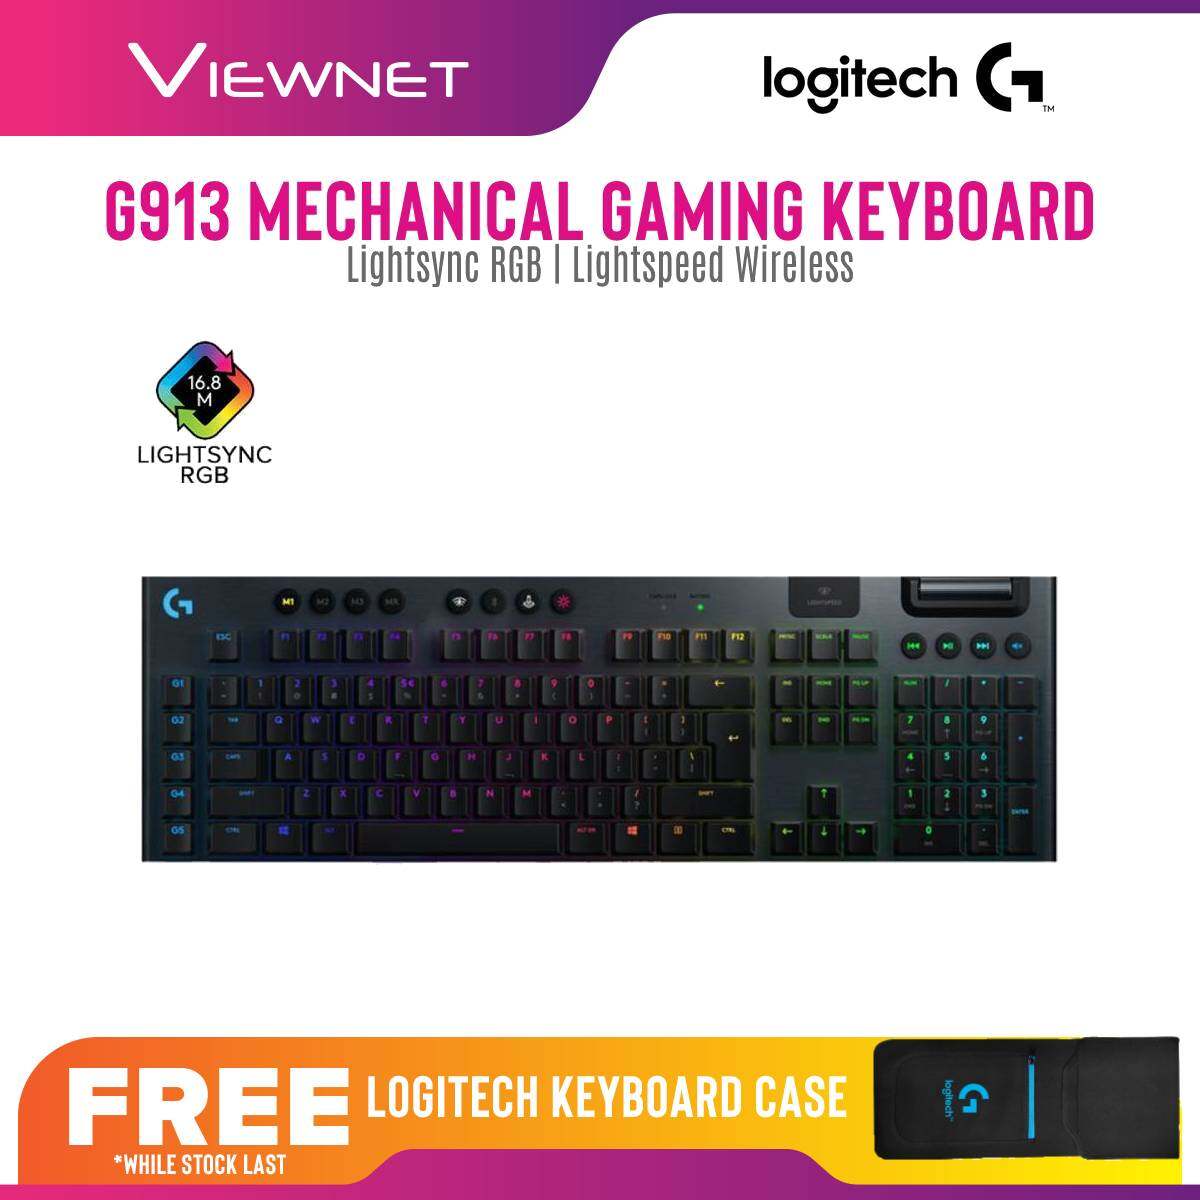 Logitech G913 Wireless RGB Mechanical Gaming Keyboard (Tactile / Linear / Clicky) Lightspeed Wireless, Lightsync RGB